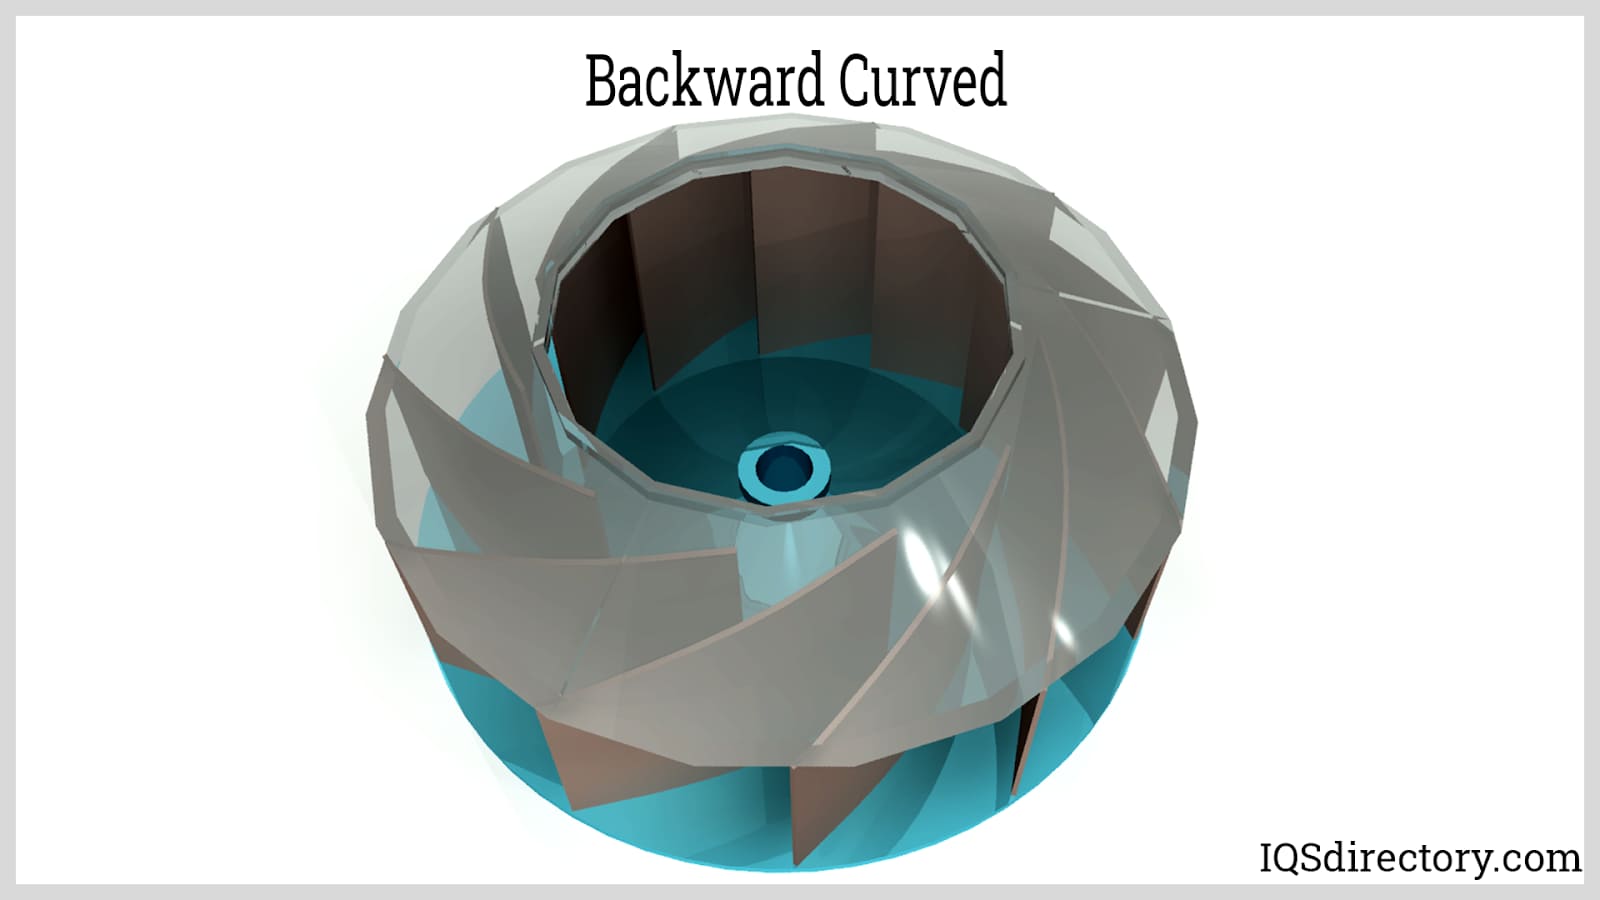 Backward curved wheels